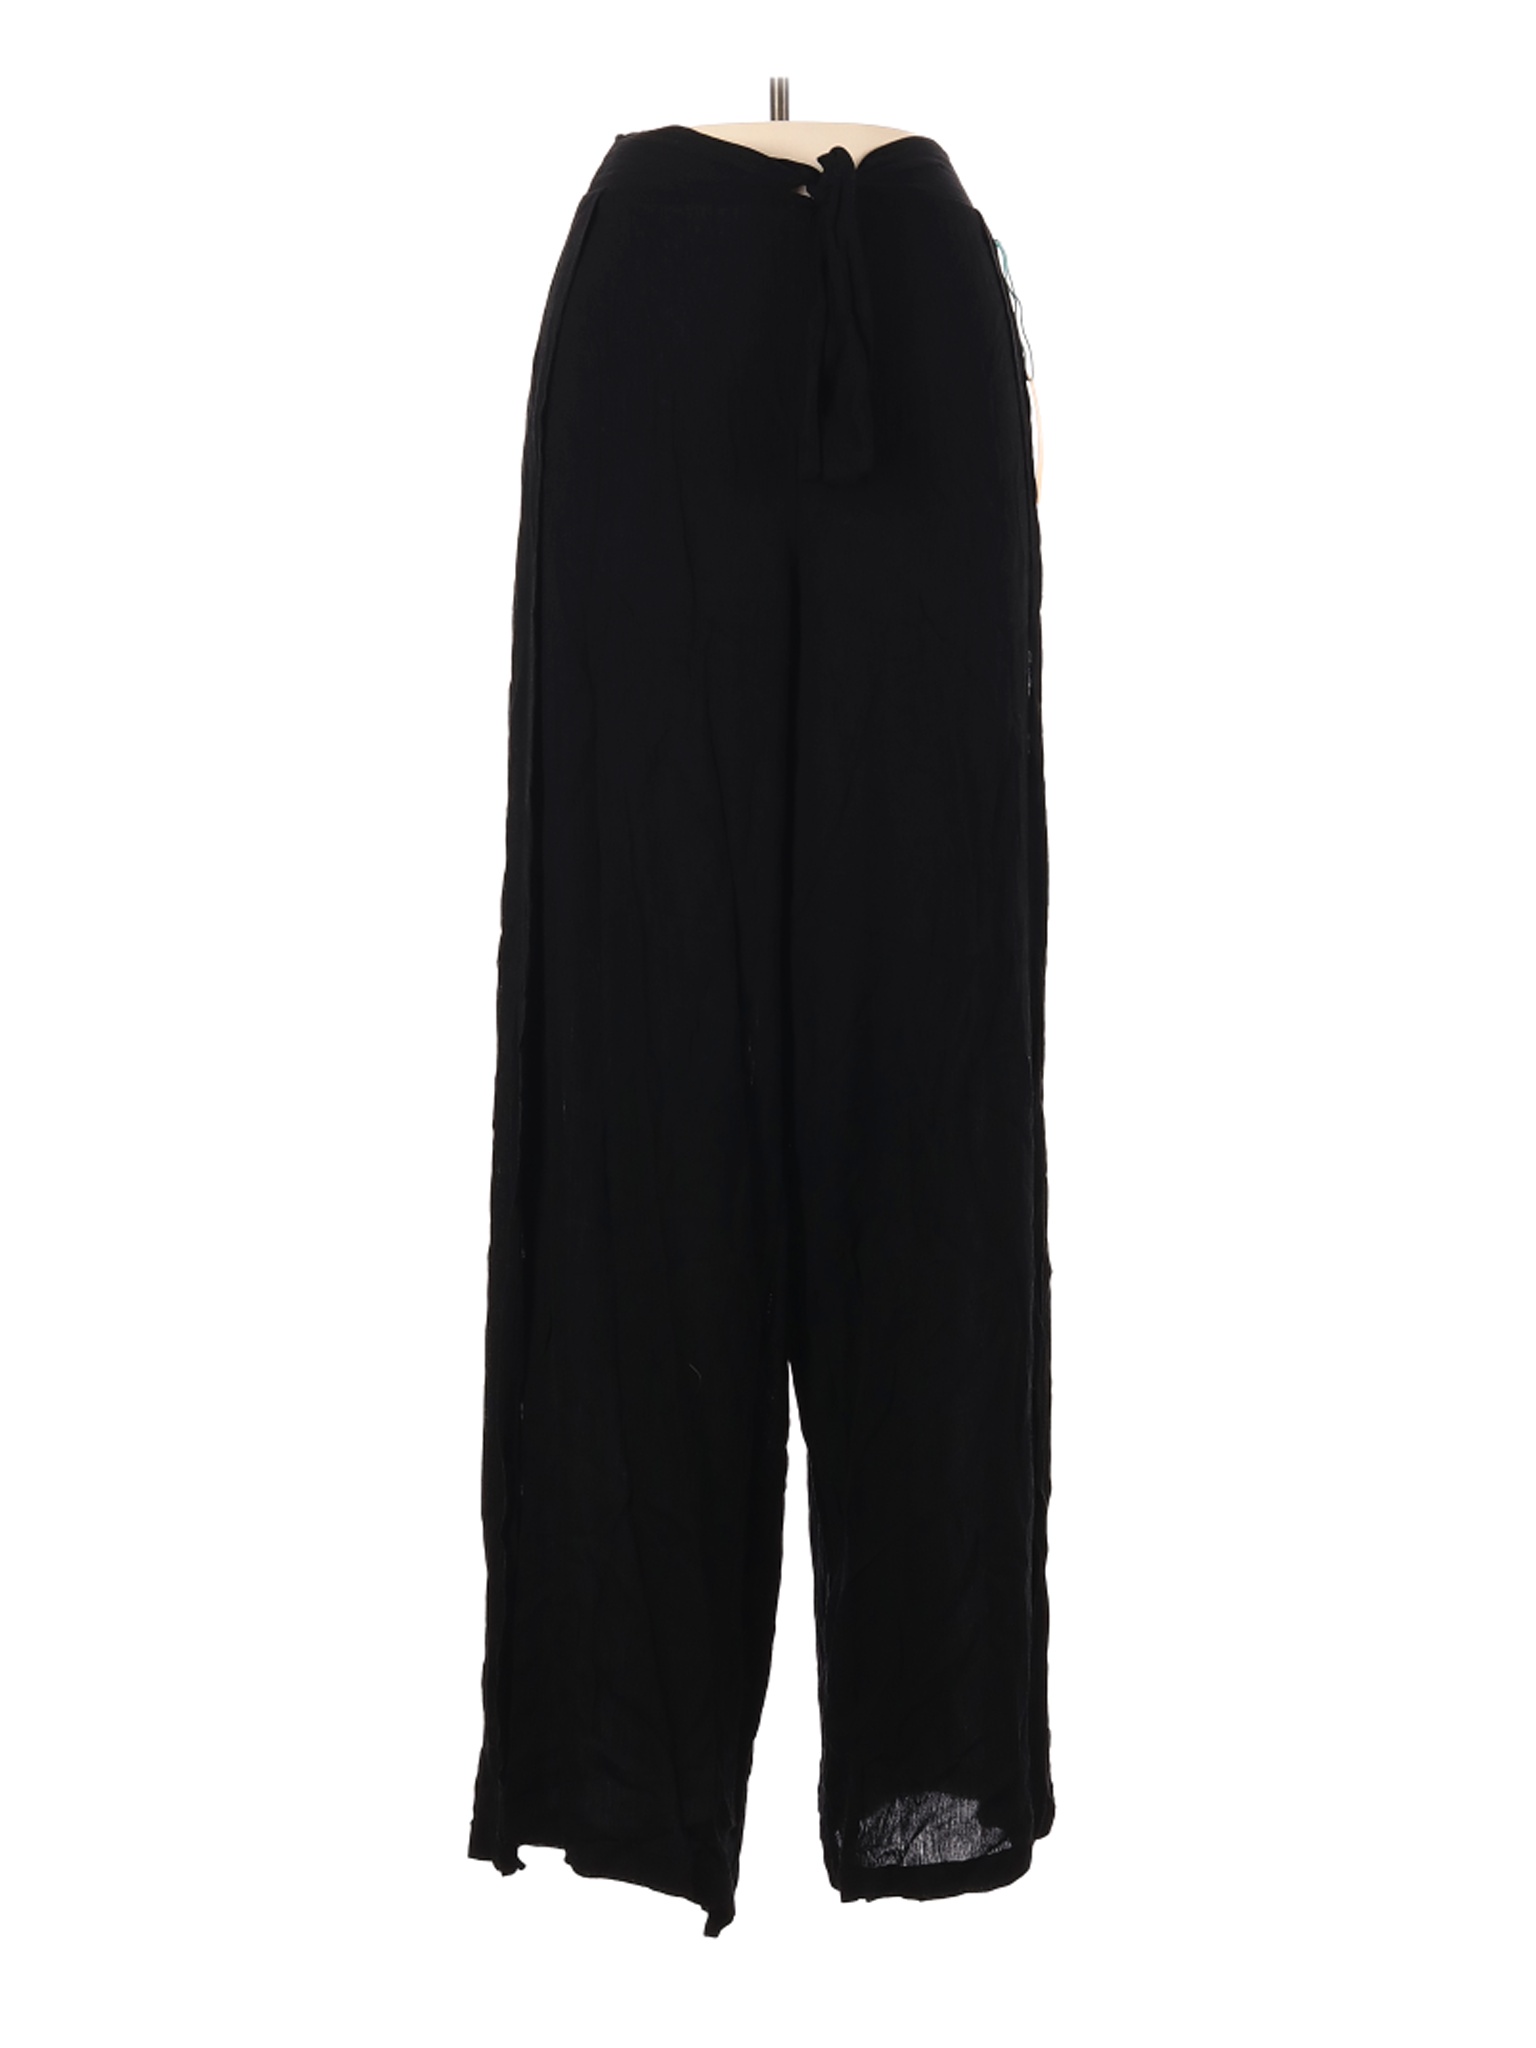 NWT Kona Sol Women Black Casual Pants XL | eBay